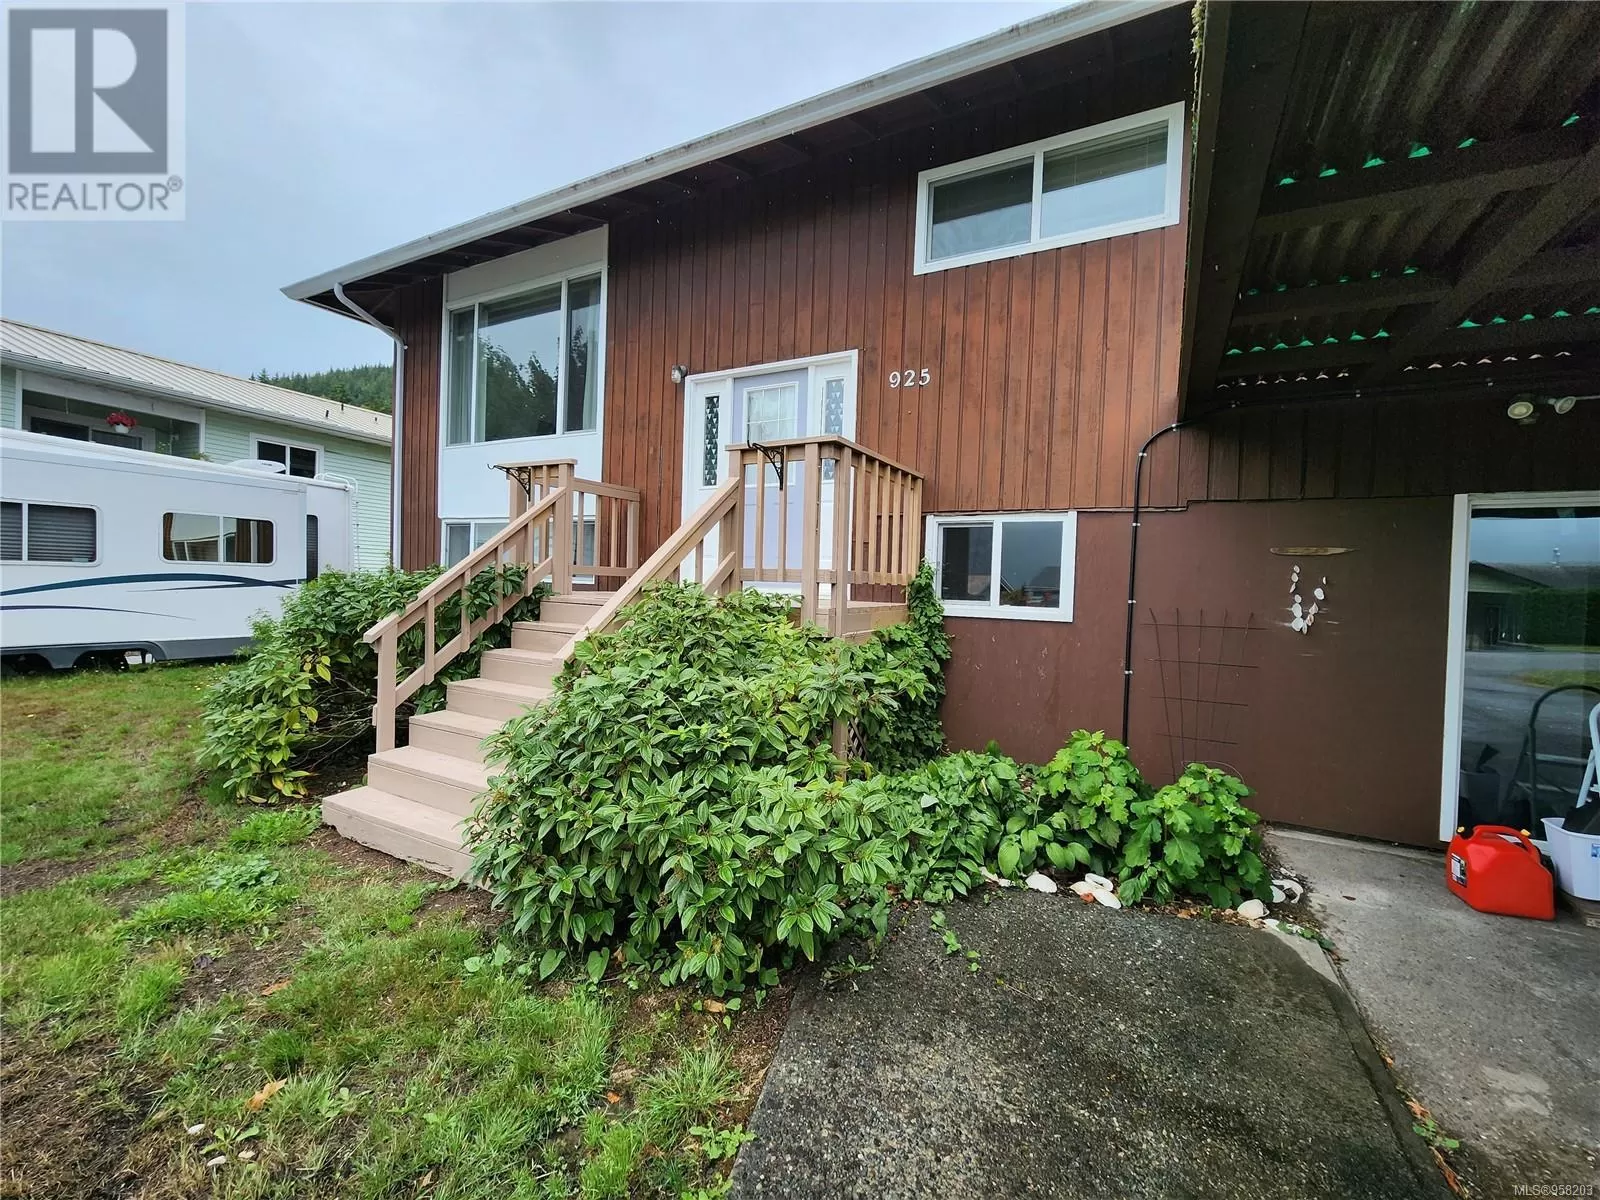 House for rent: 925 Haida Ave, Port Alice, British Columbia V0N 2N0